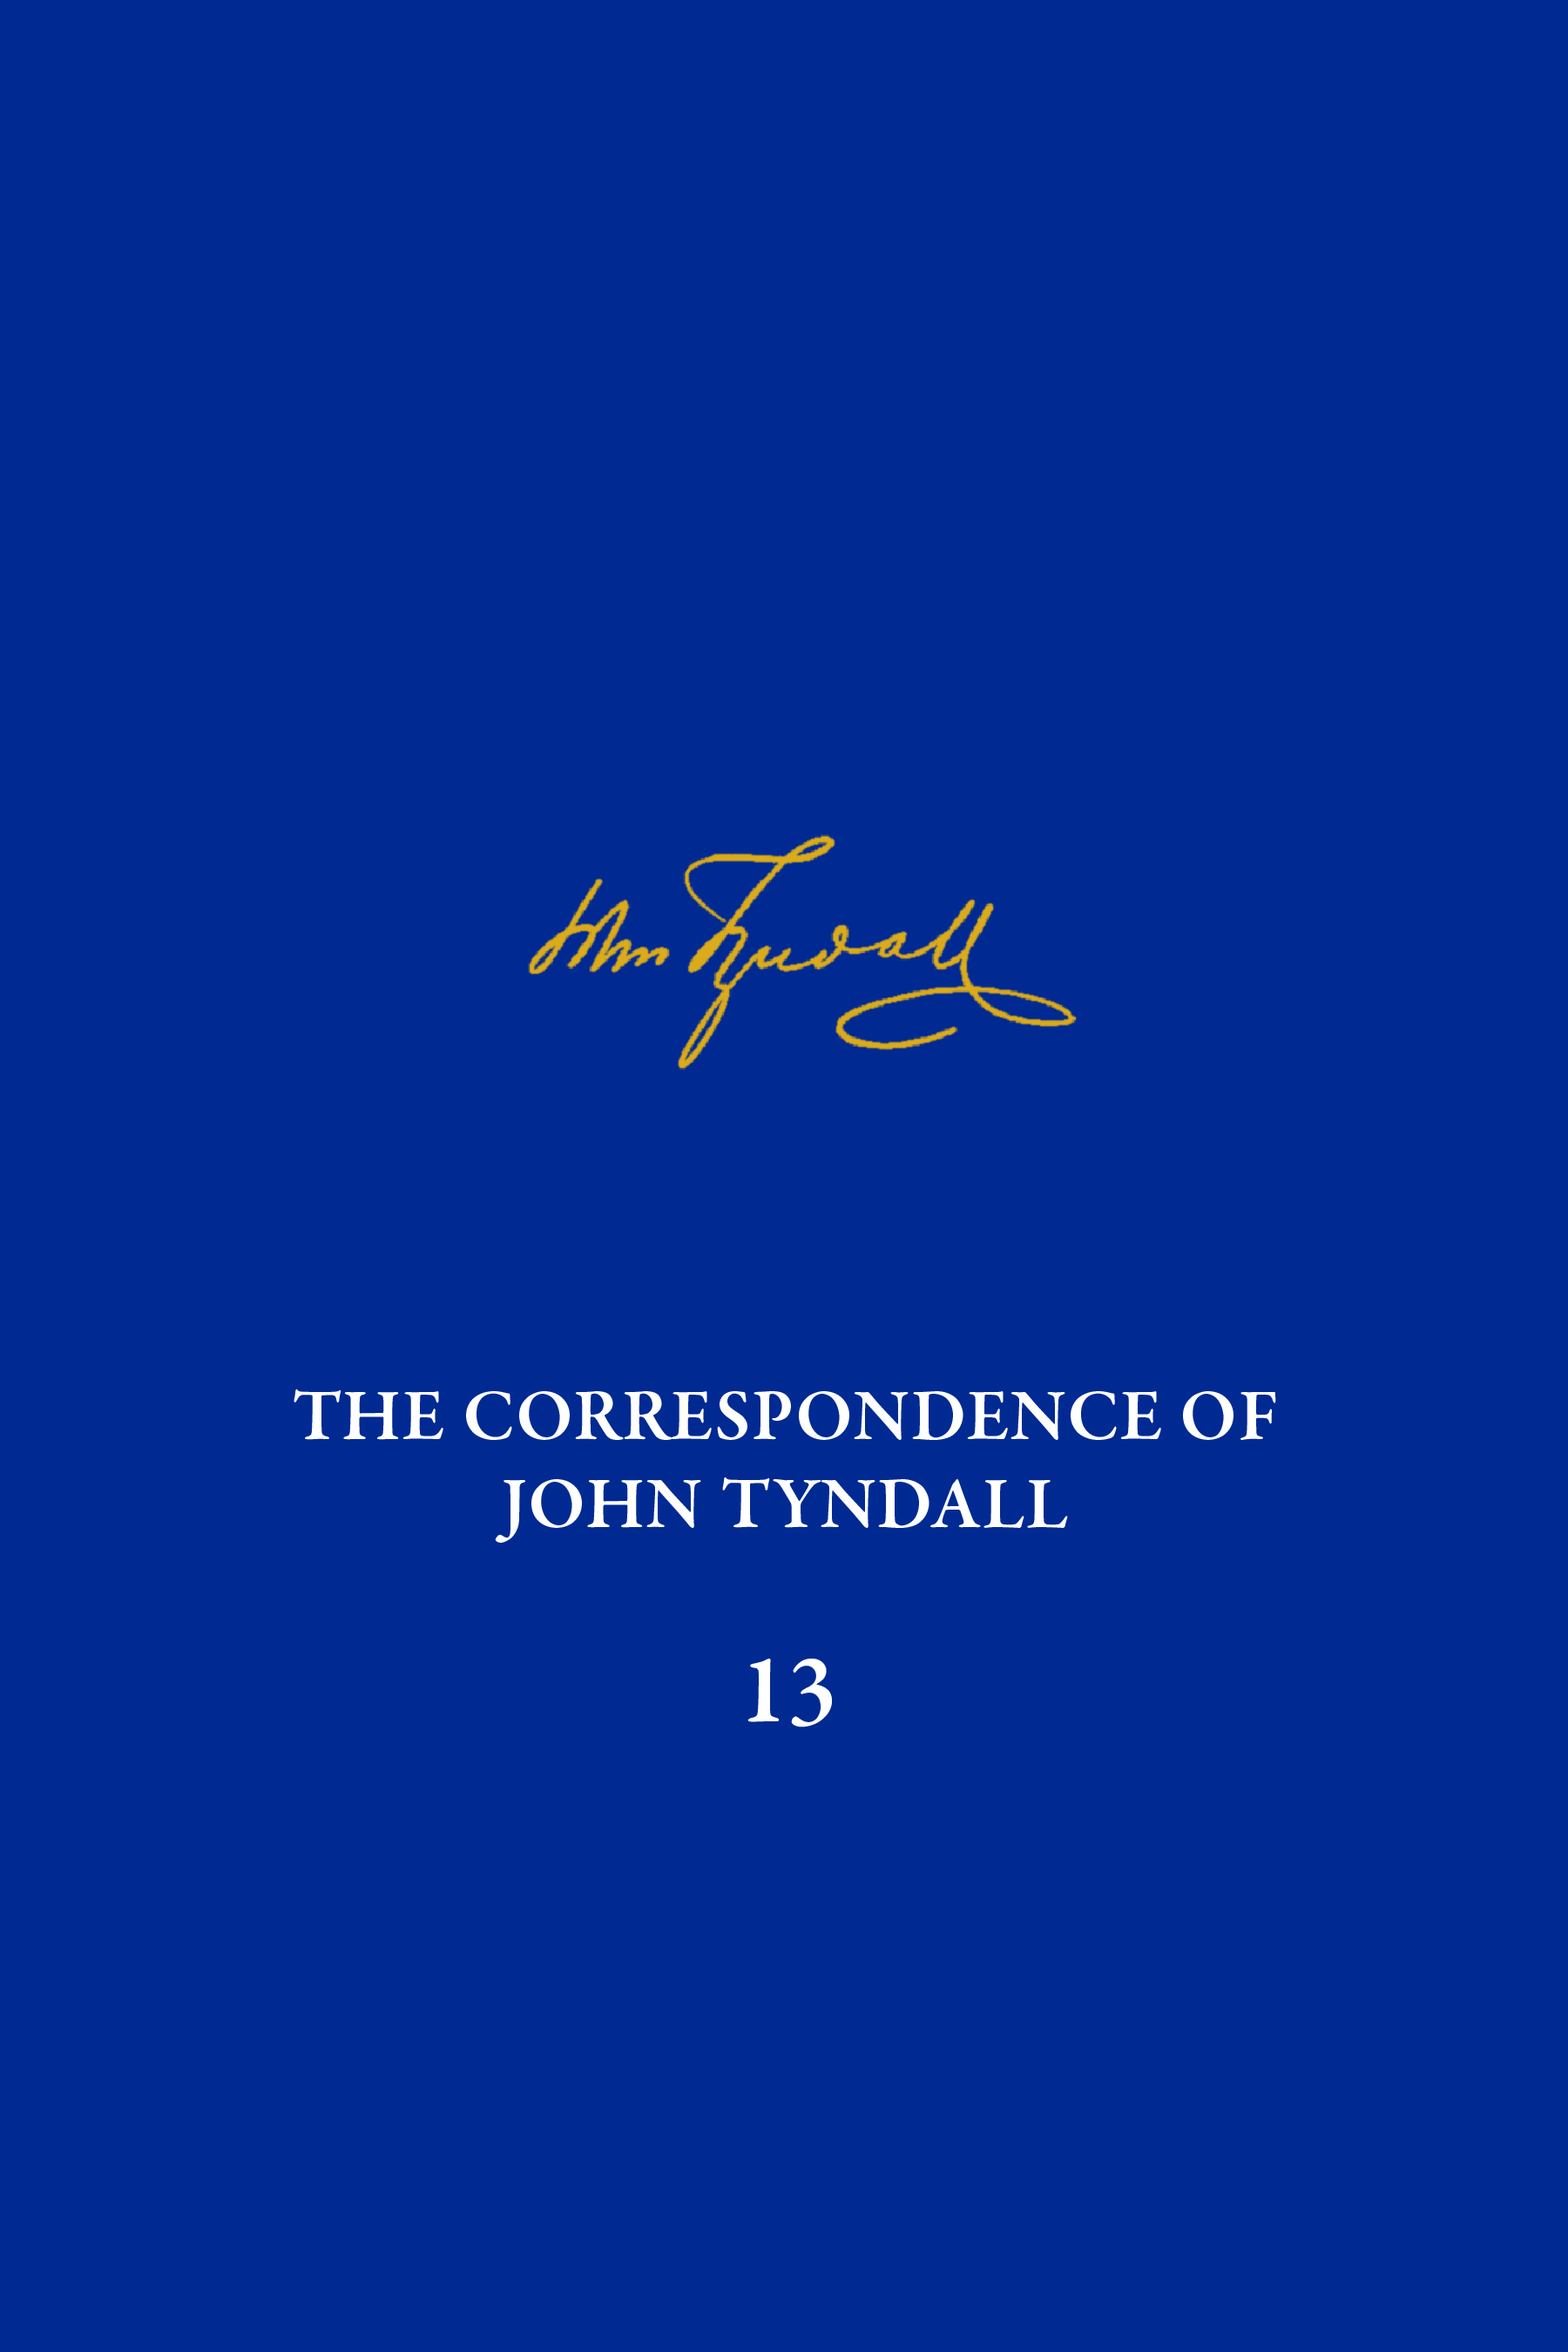 Correspondence of John Tyndall, Volume 13